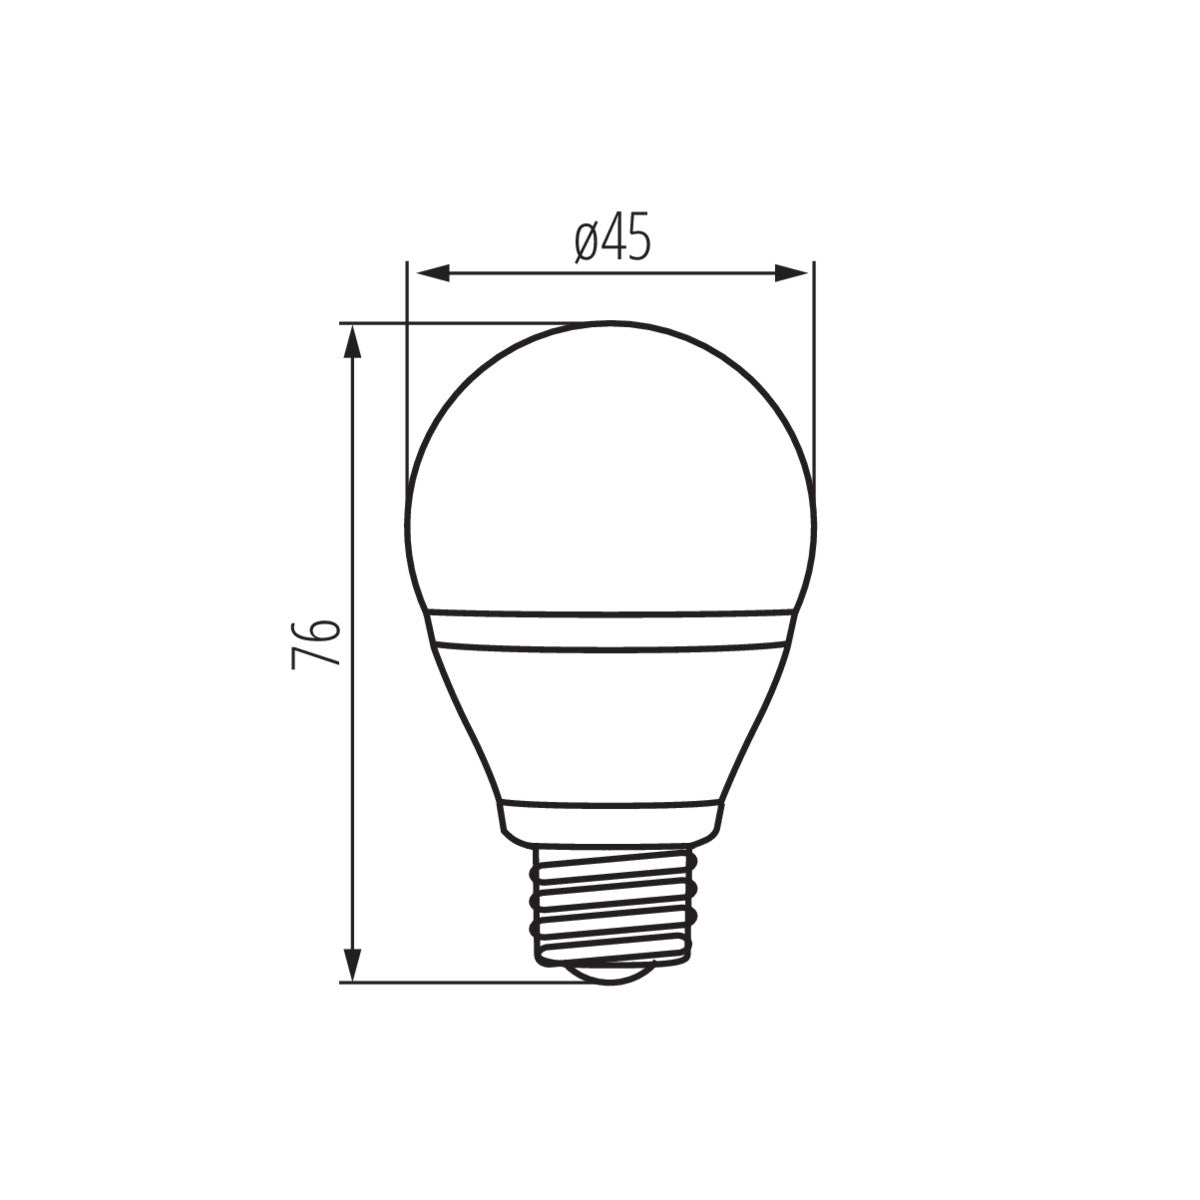 bilo 6,5w smd e27 luce naturale lampadina led mini globo kanlux 23421 -  Elettroluce Store